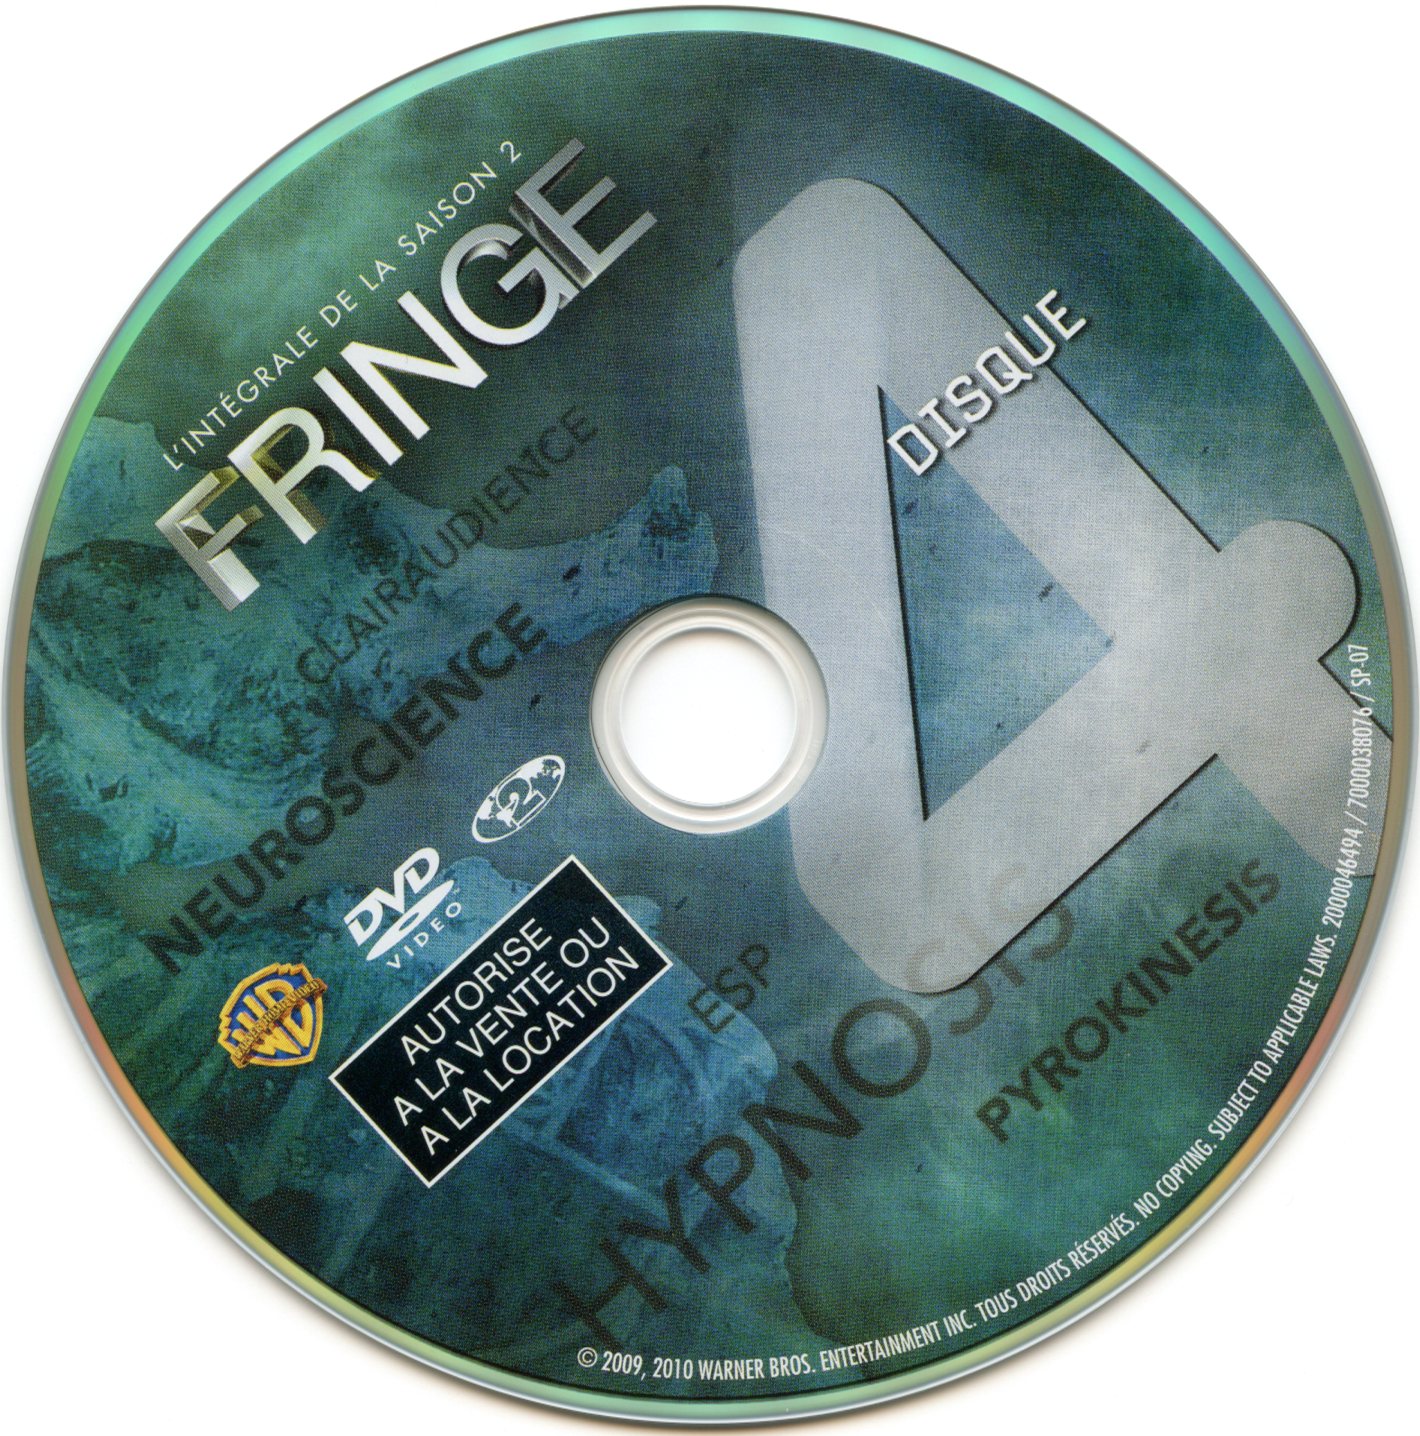 Fringe Saison 2 DVD 4